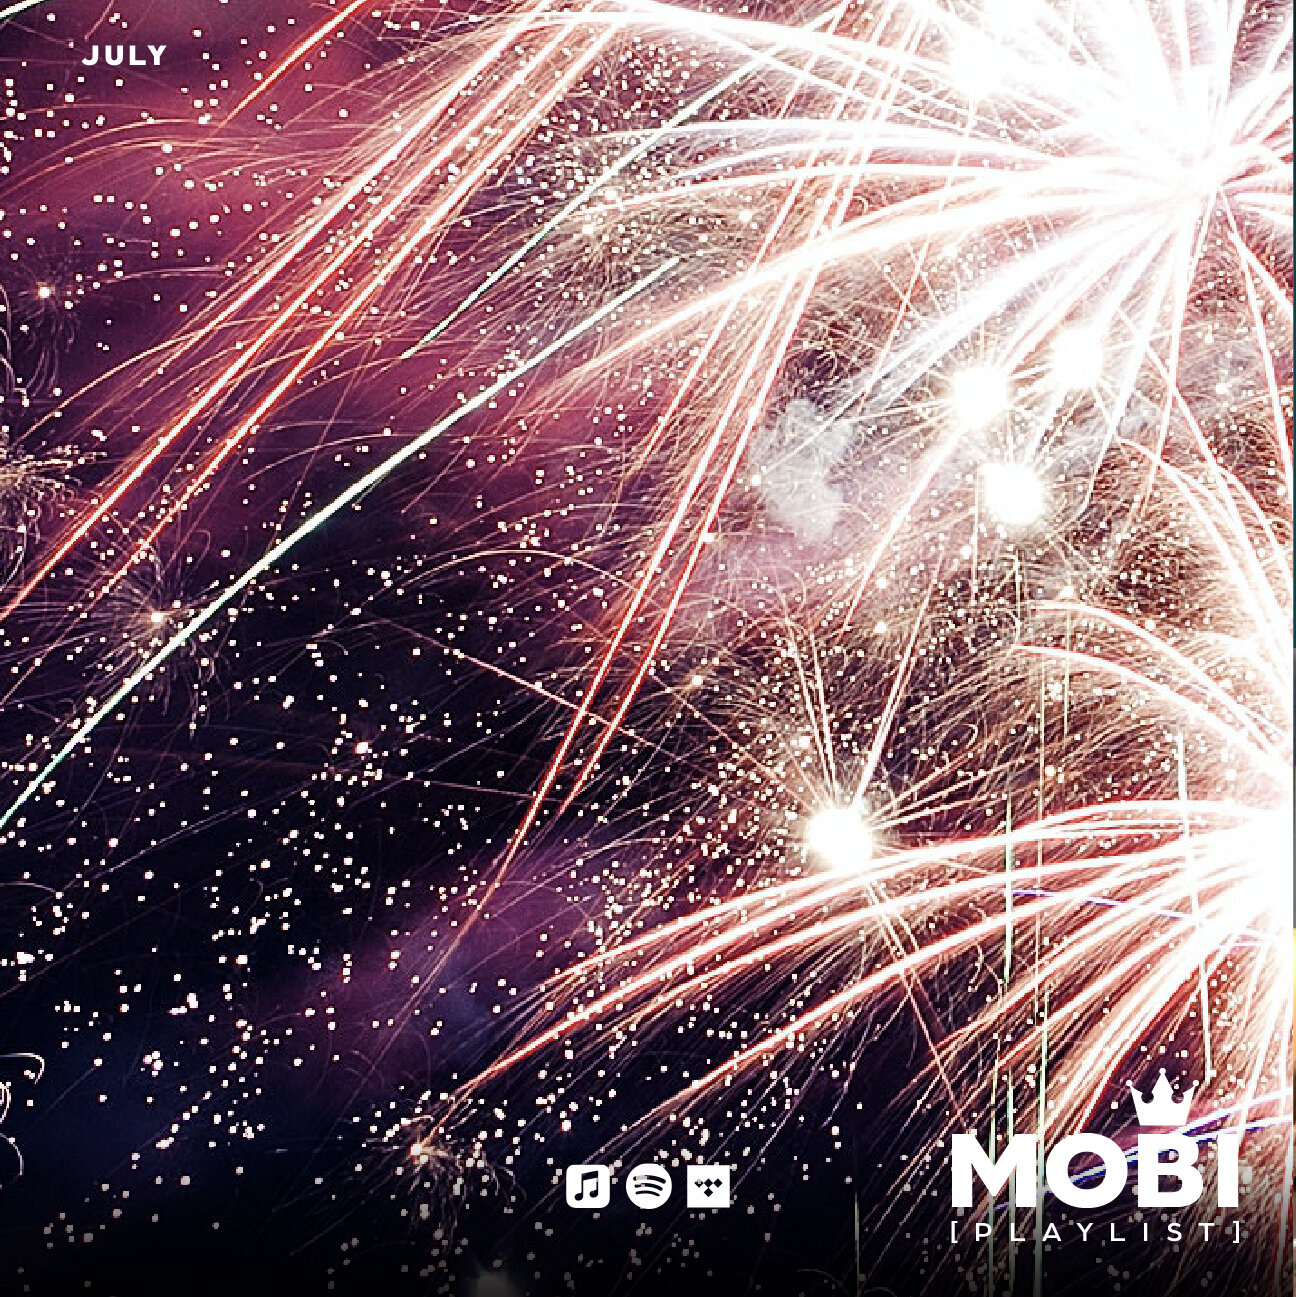 MOBIplaylist - JULY - 8.jpg